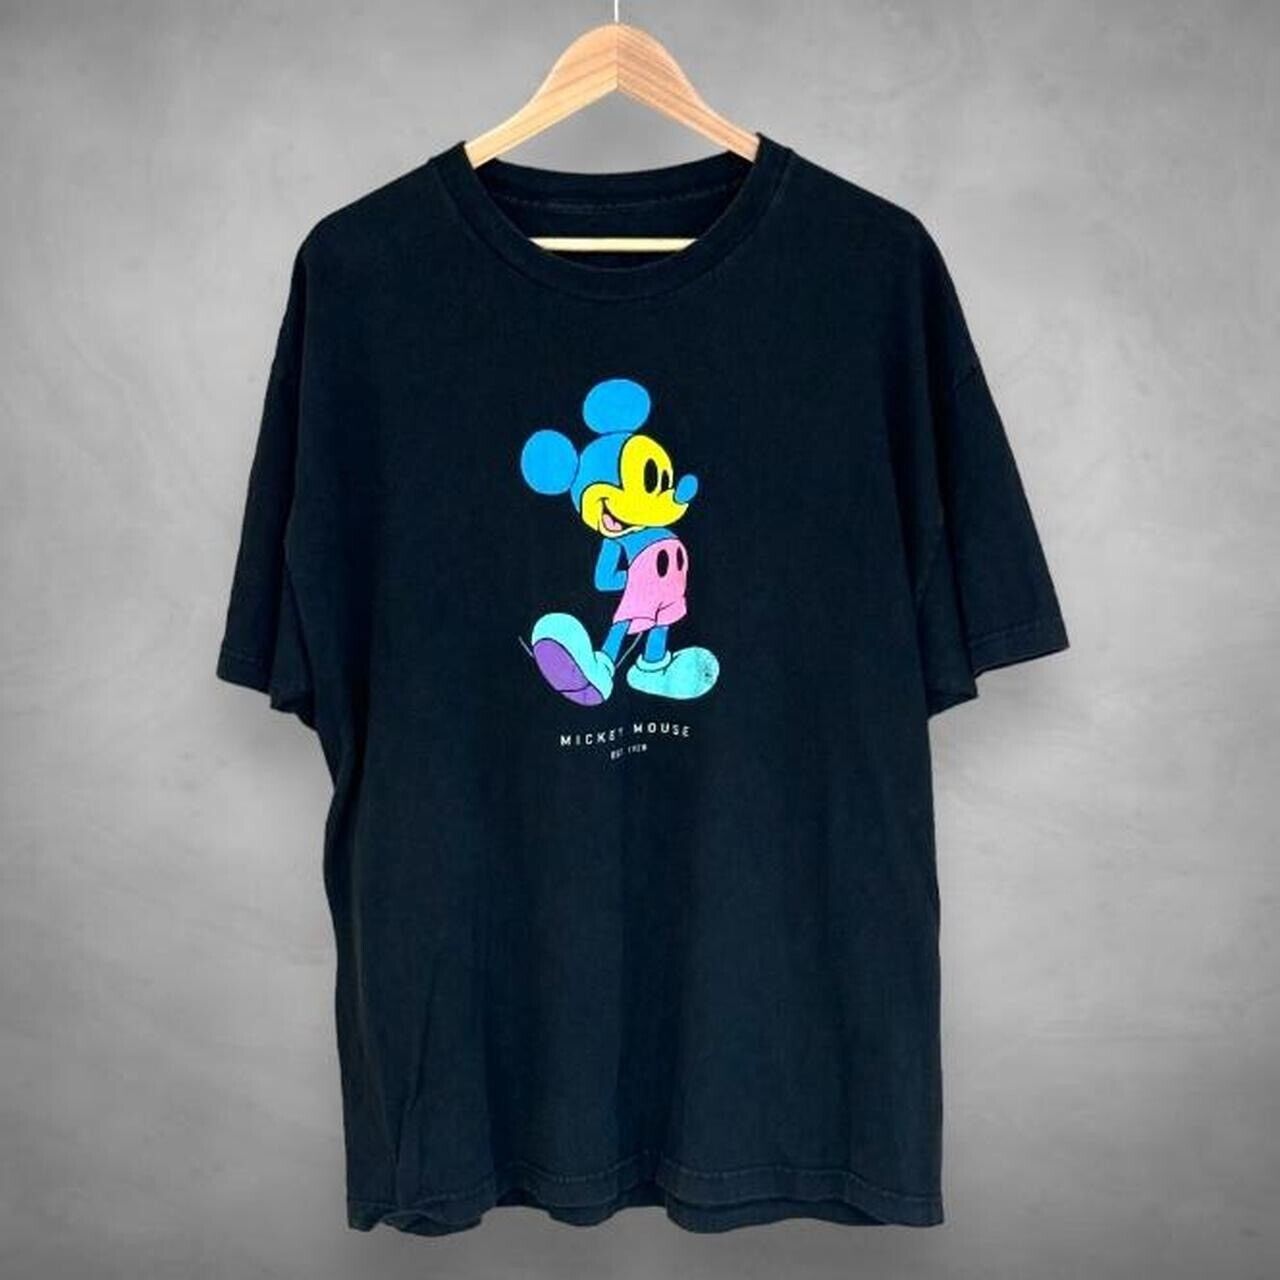 Disney Mickey Mouse T-shirt Mens XL Black Neon